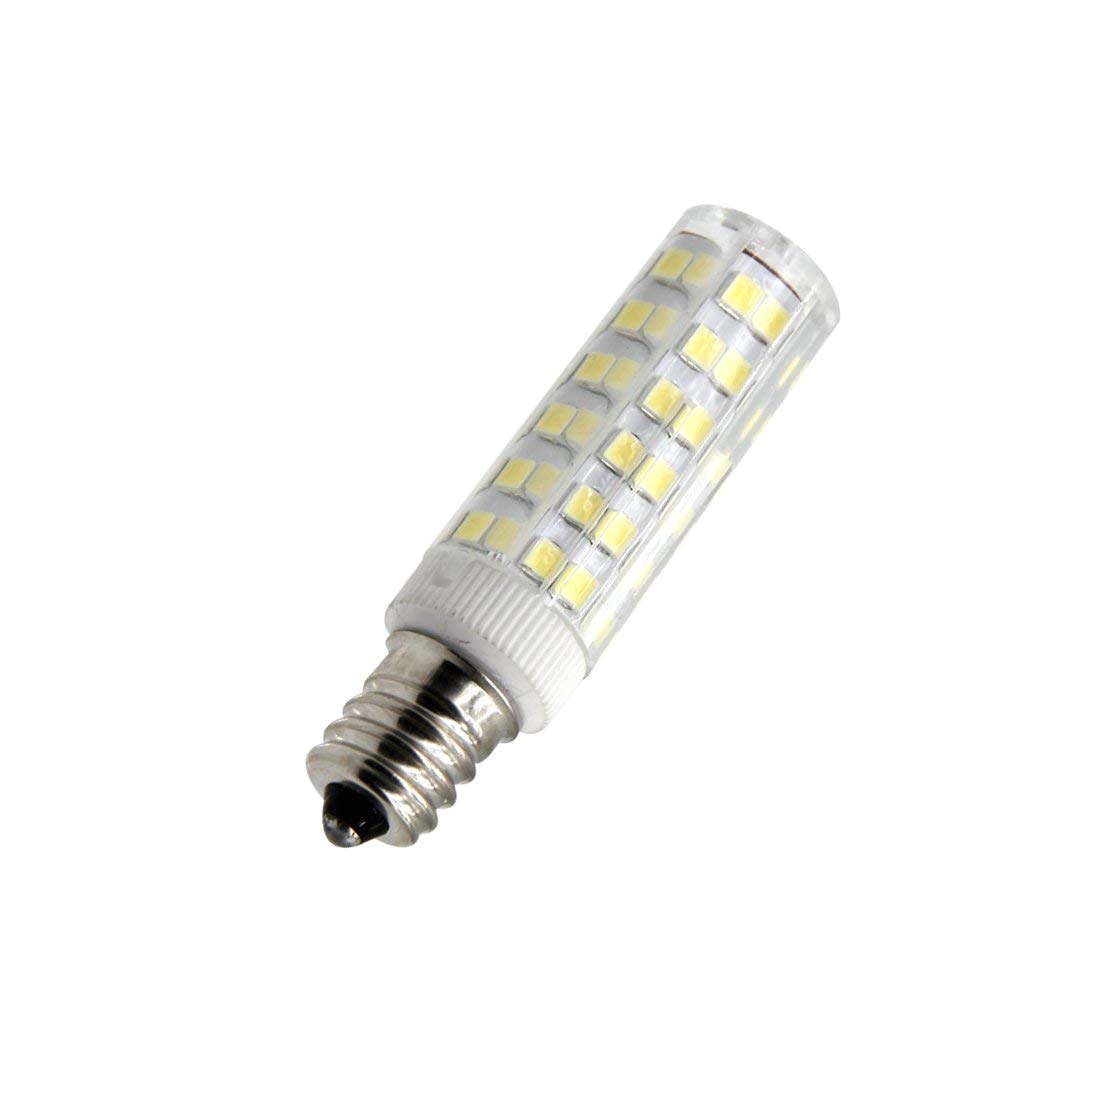 ulight led e12 led light bulb 120v 6000k daylight white 6w led e12 candelabra screw base xenon t4 jd type led halogen bulb replacement 50w or 60w with